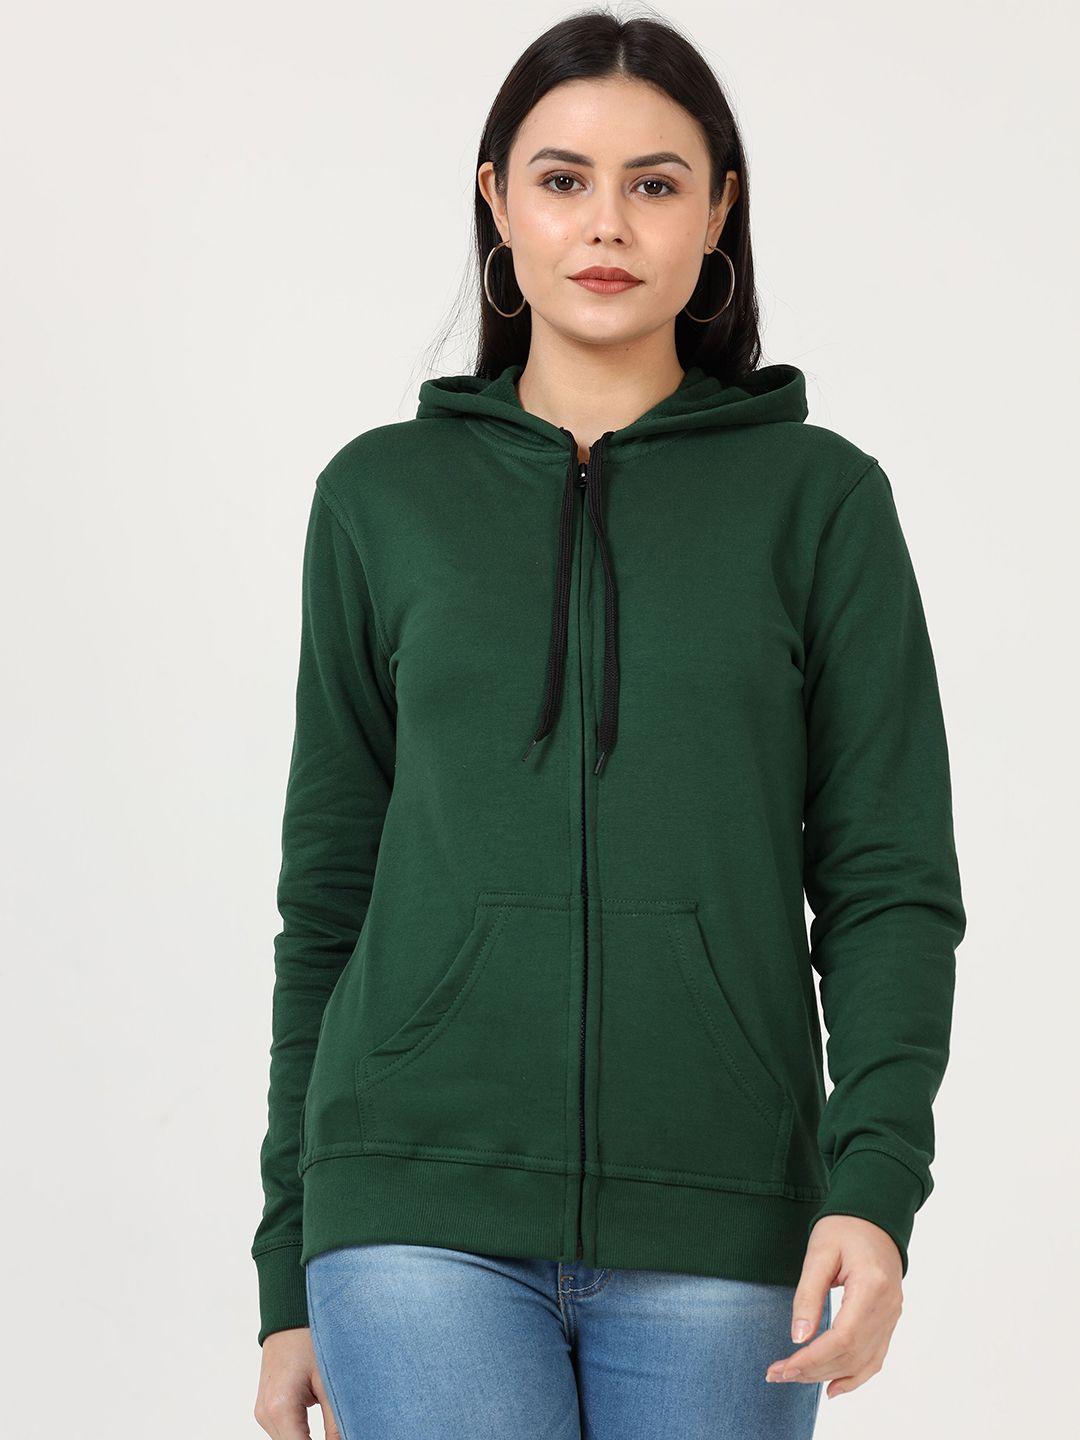 fleximaa-women-olive-green-hooded-sweatshirt